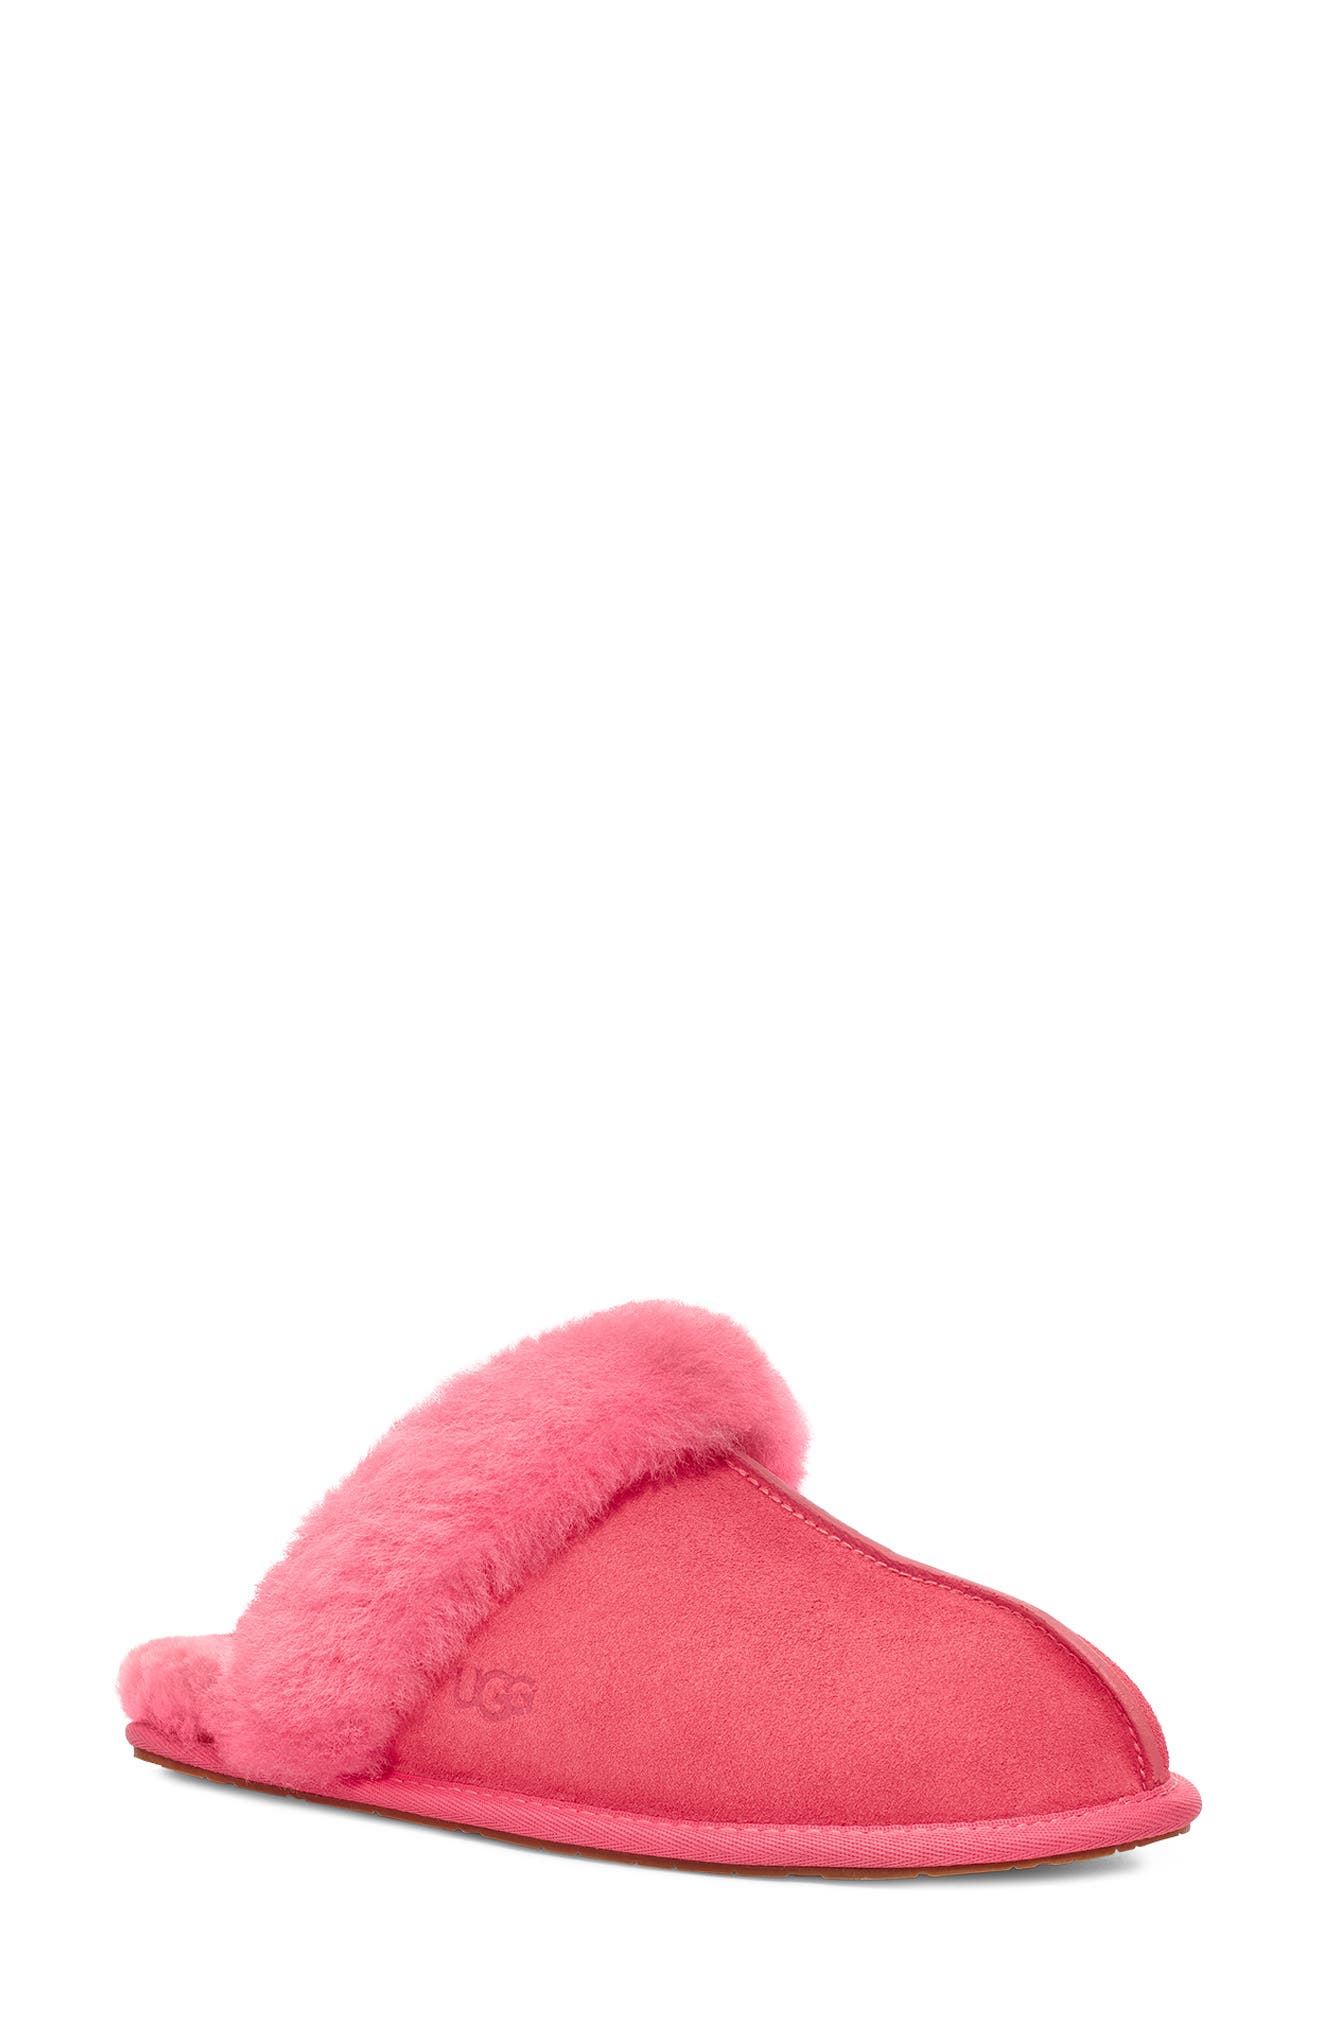 pink ugh slippers